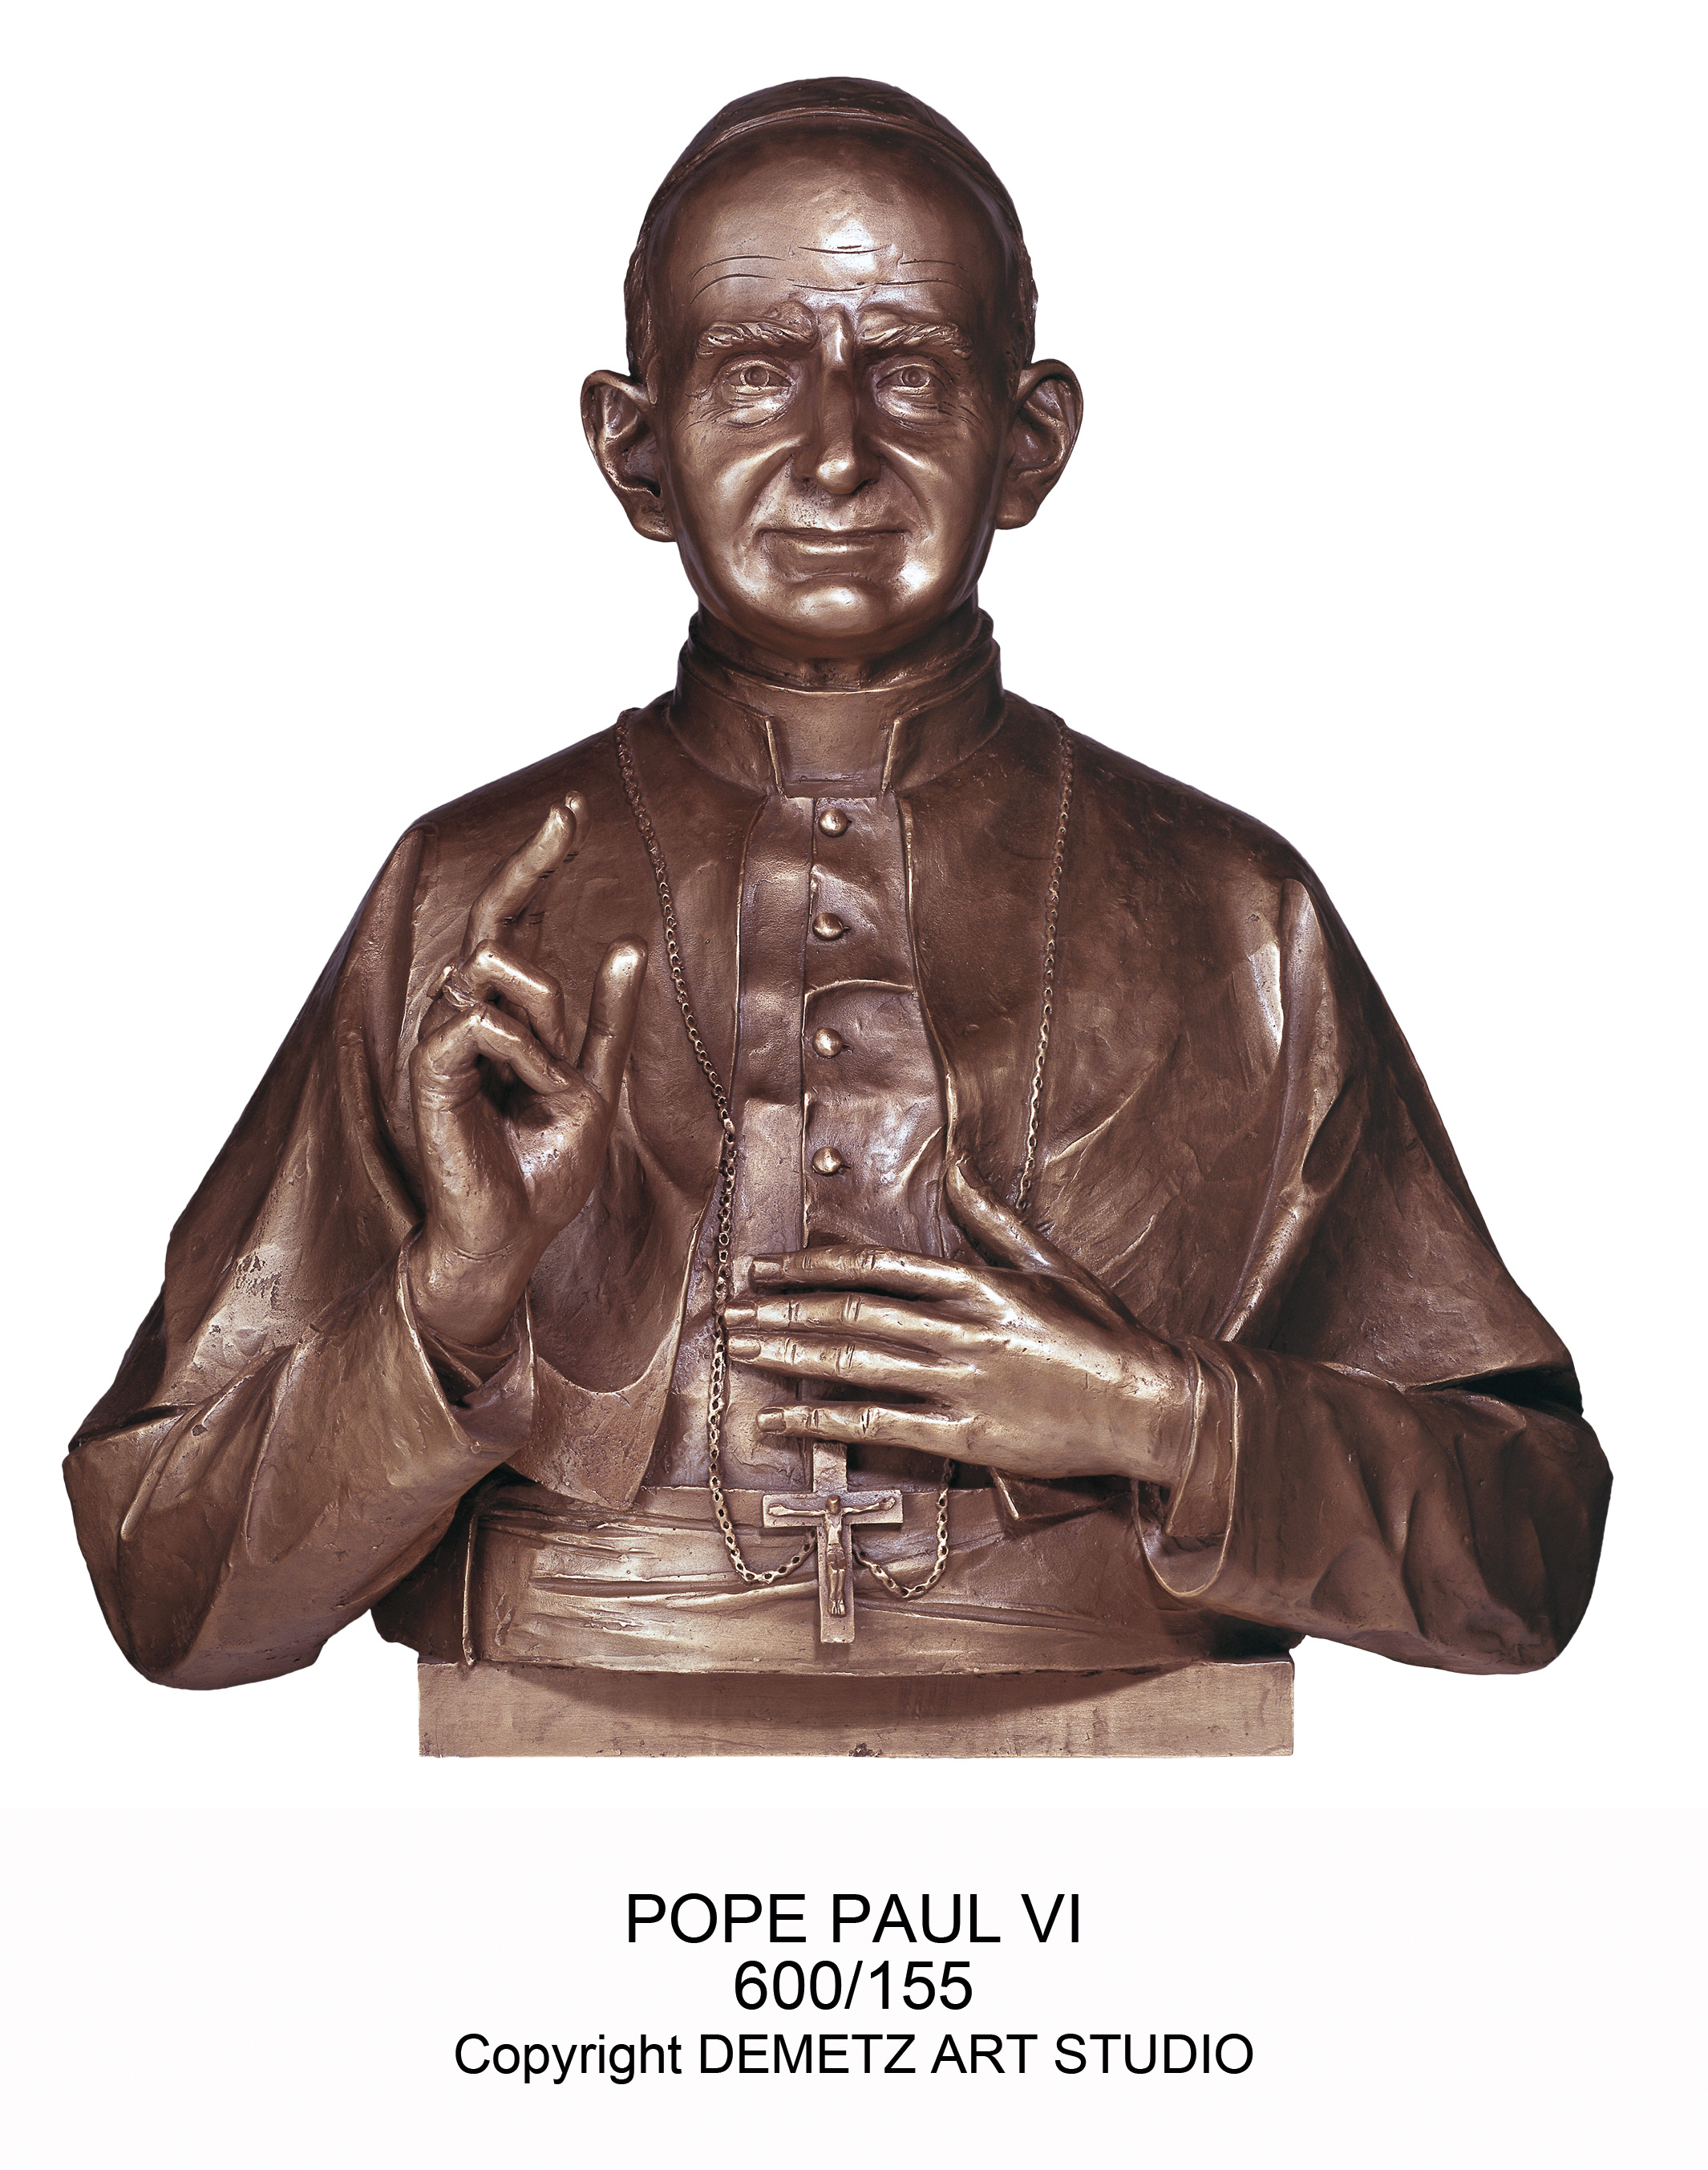 Statue Blessed Paul Vi (Pope) - Bust 24" x 24" x 16" Fiberglass